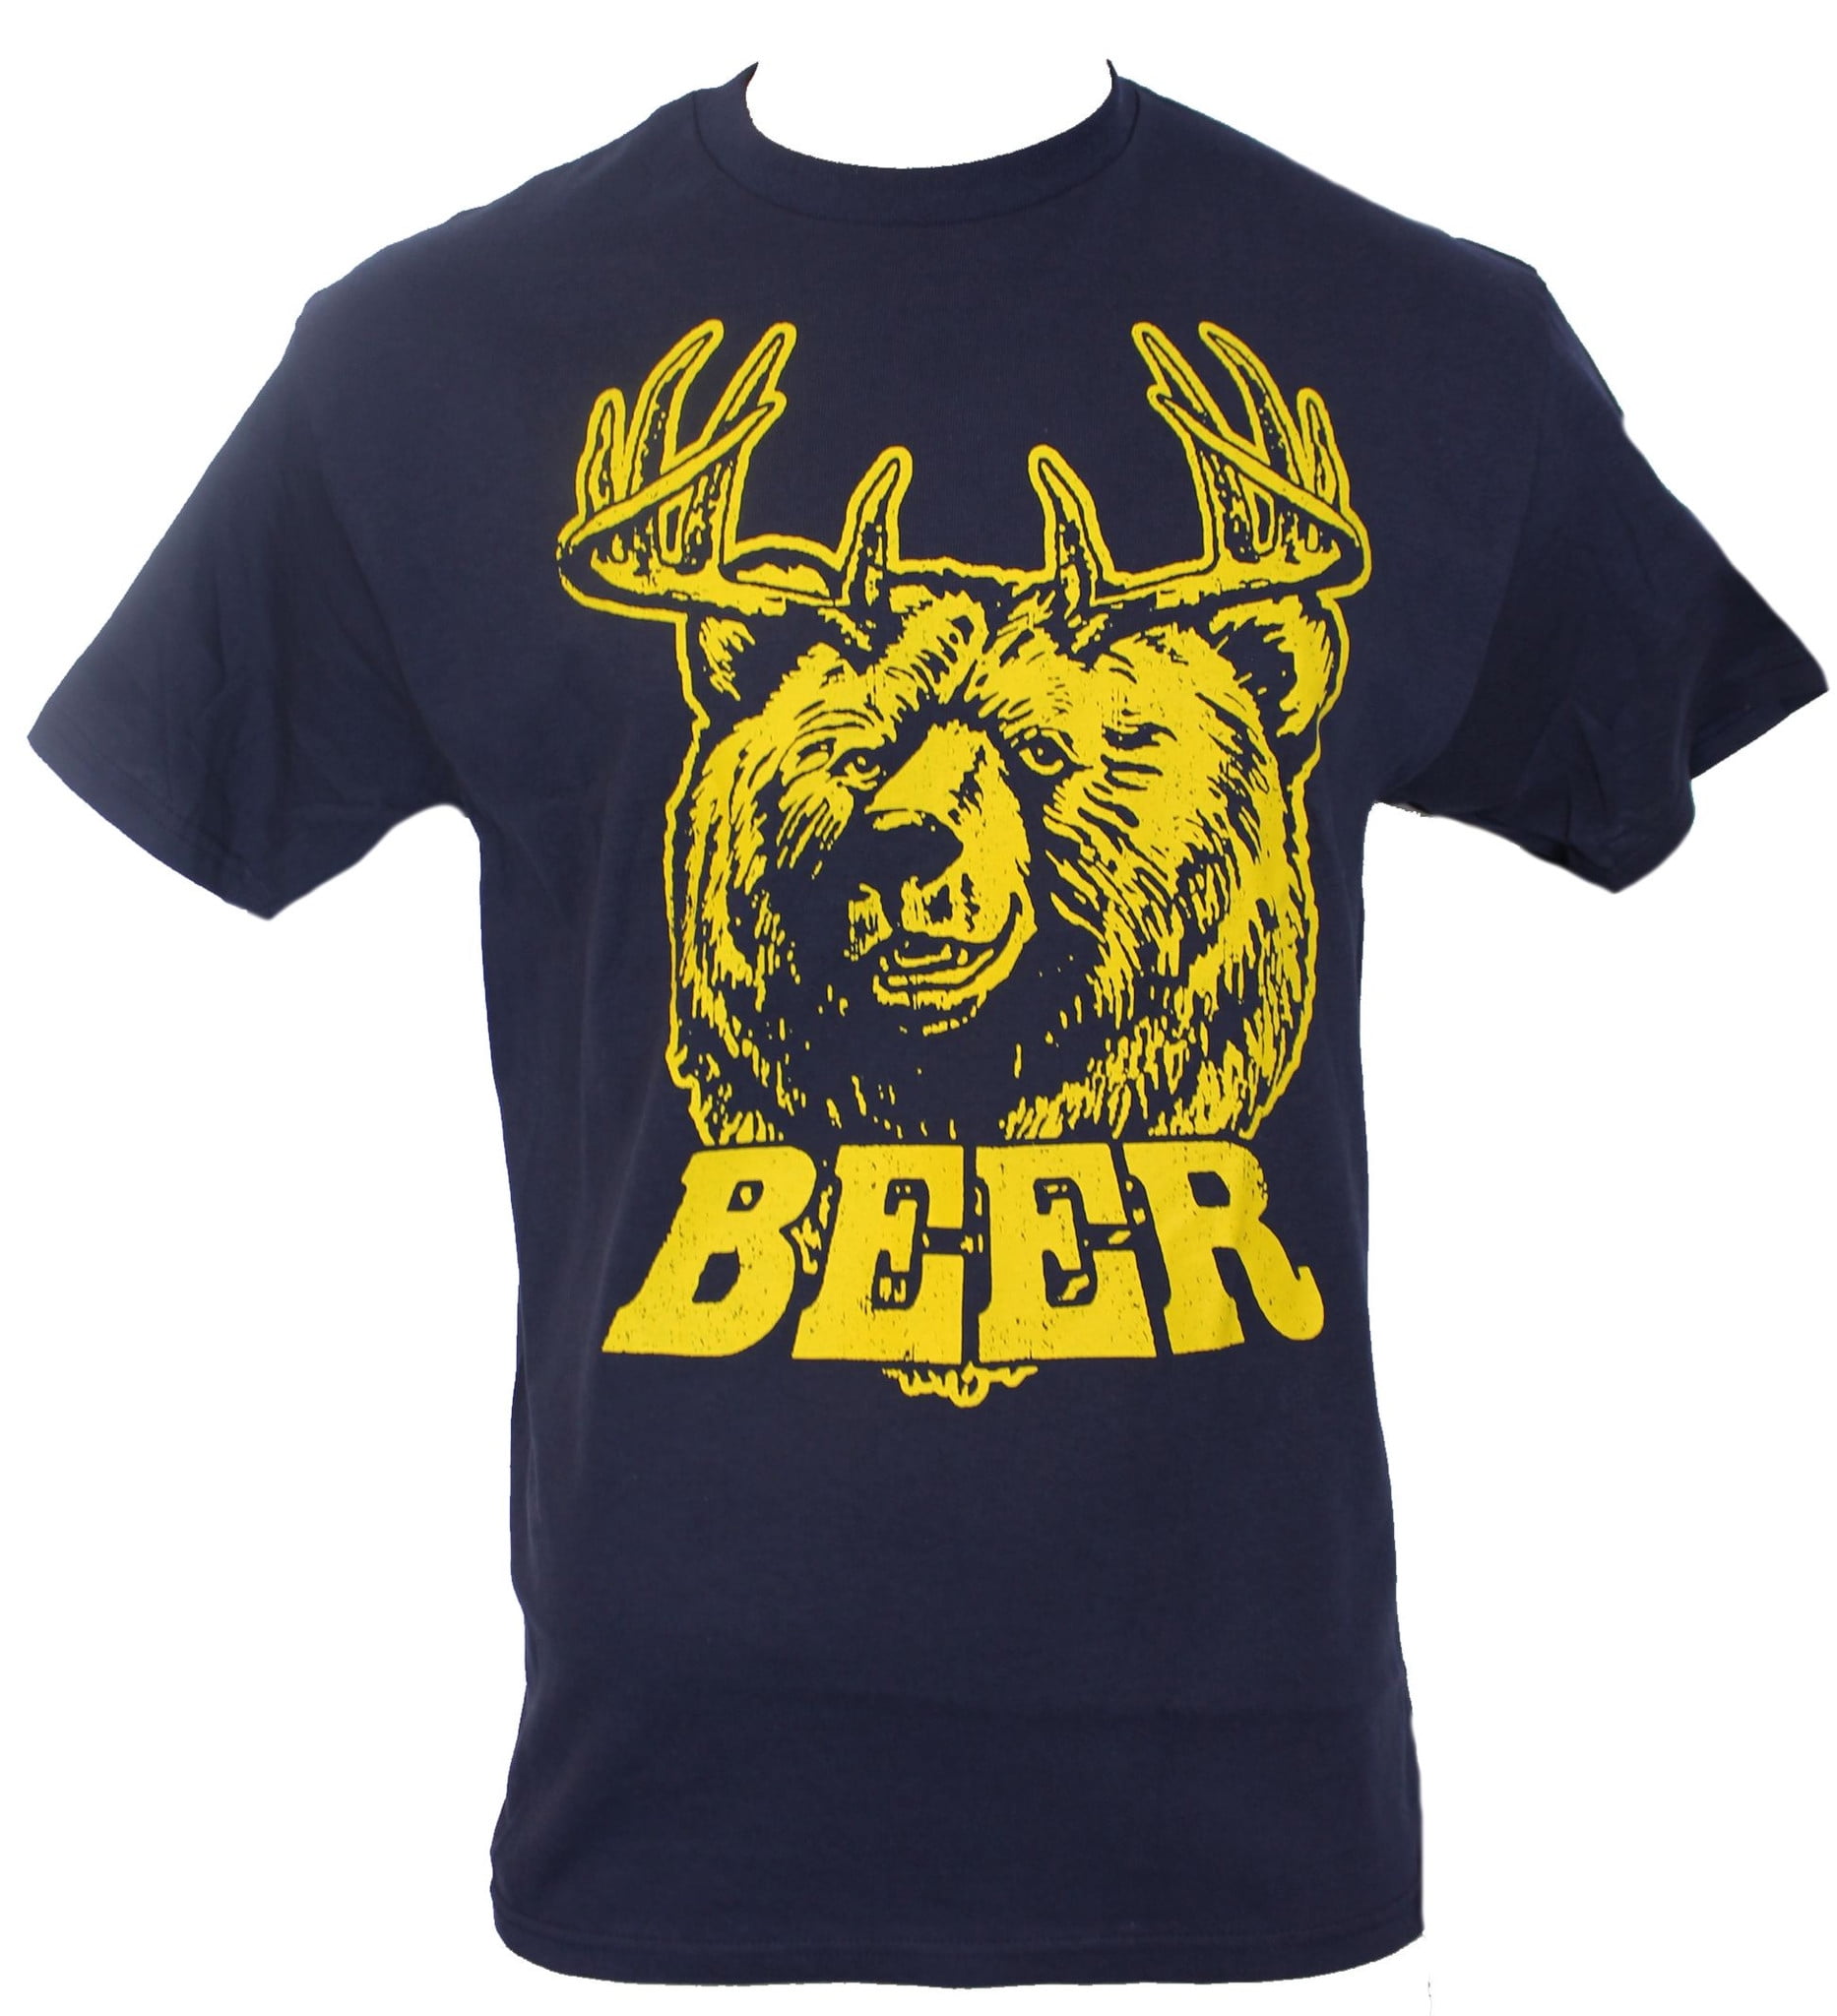 Tank Top-Beer Bear deer-culto Fun divertido cerveza cuerna oso funshirt camisa S-XXL 